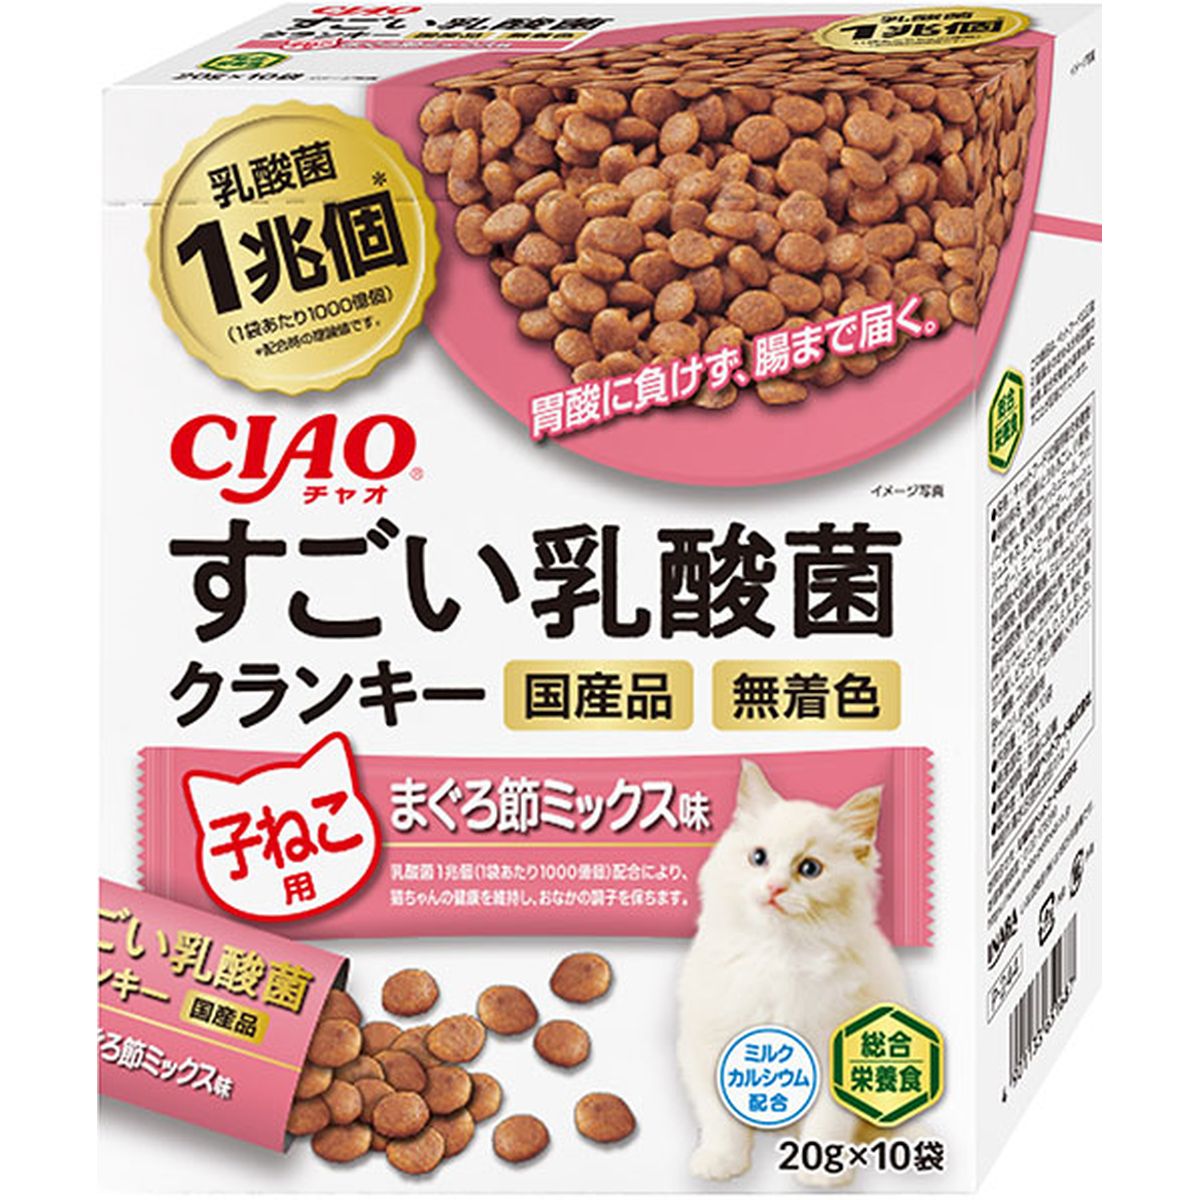 CIAOスゴイ乳酸菌クランキー 子ネコ用 マグロ節ミックス味 20g×10袋×12